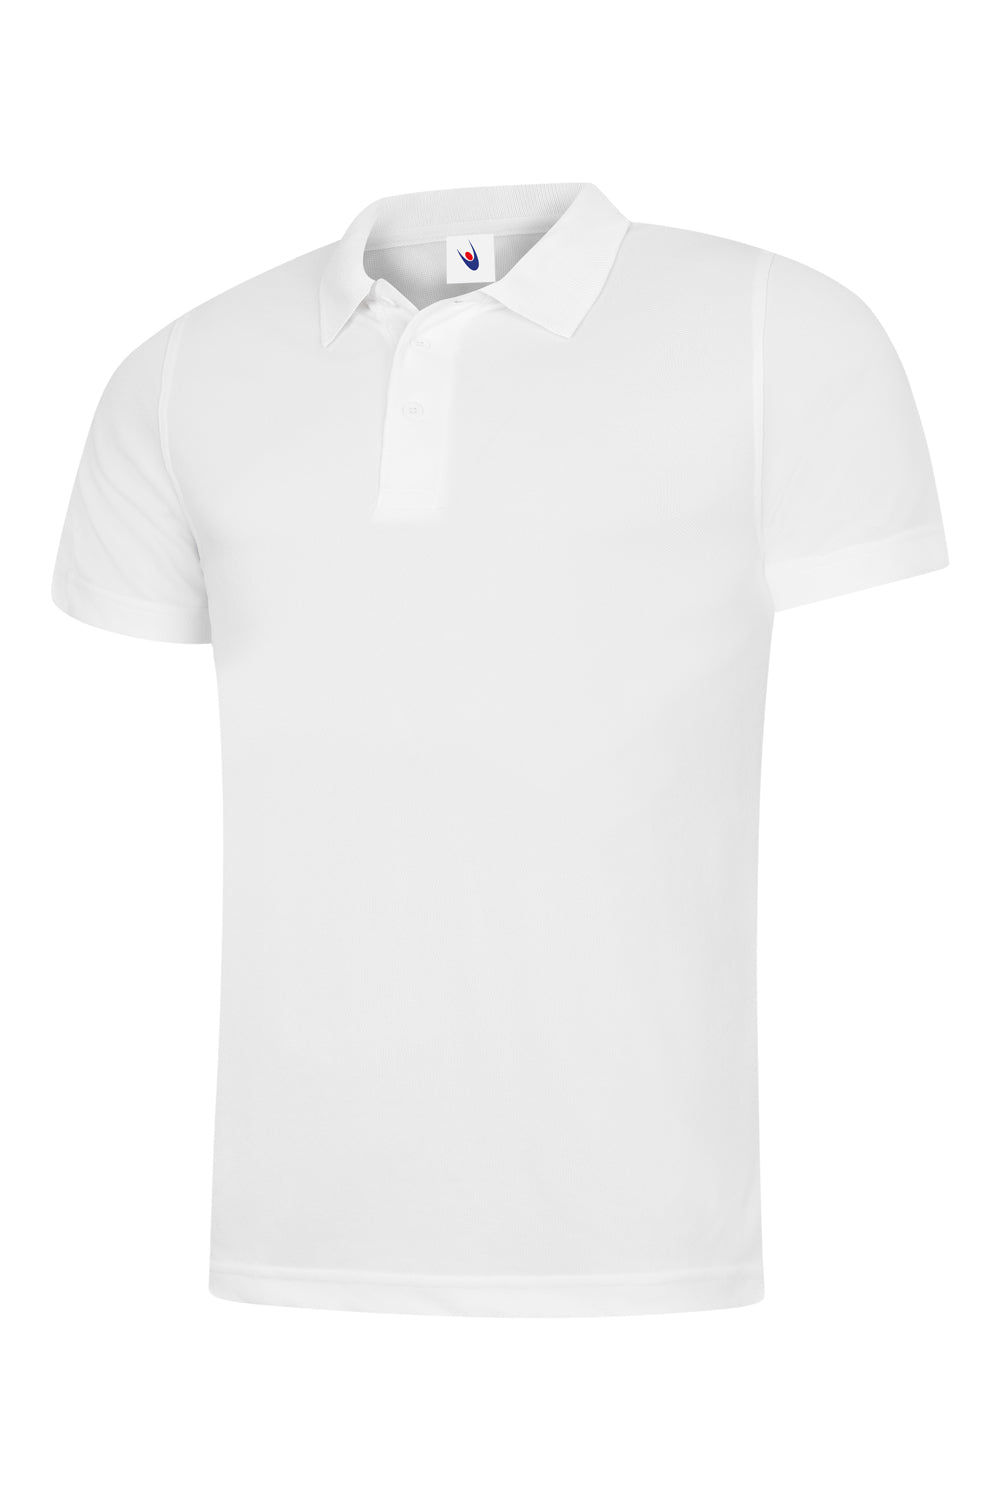 Uneek Mens Super Cool Workwear Poloshirt UC127 - White